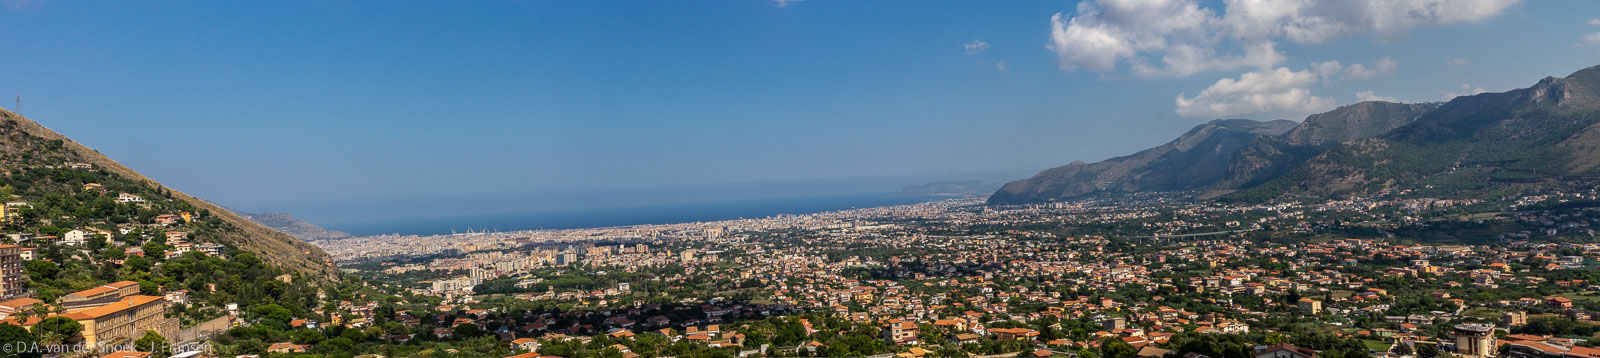 Sicilië-2021-254-Pano.jpg